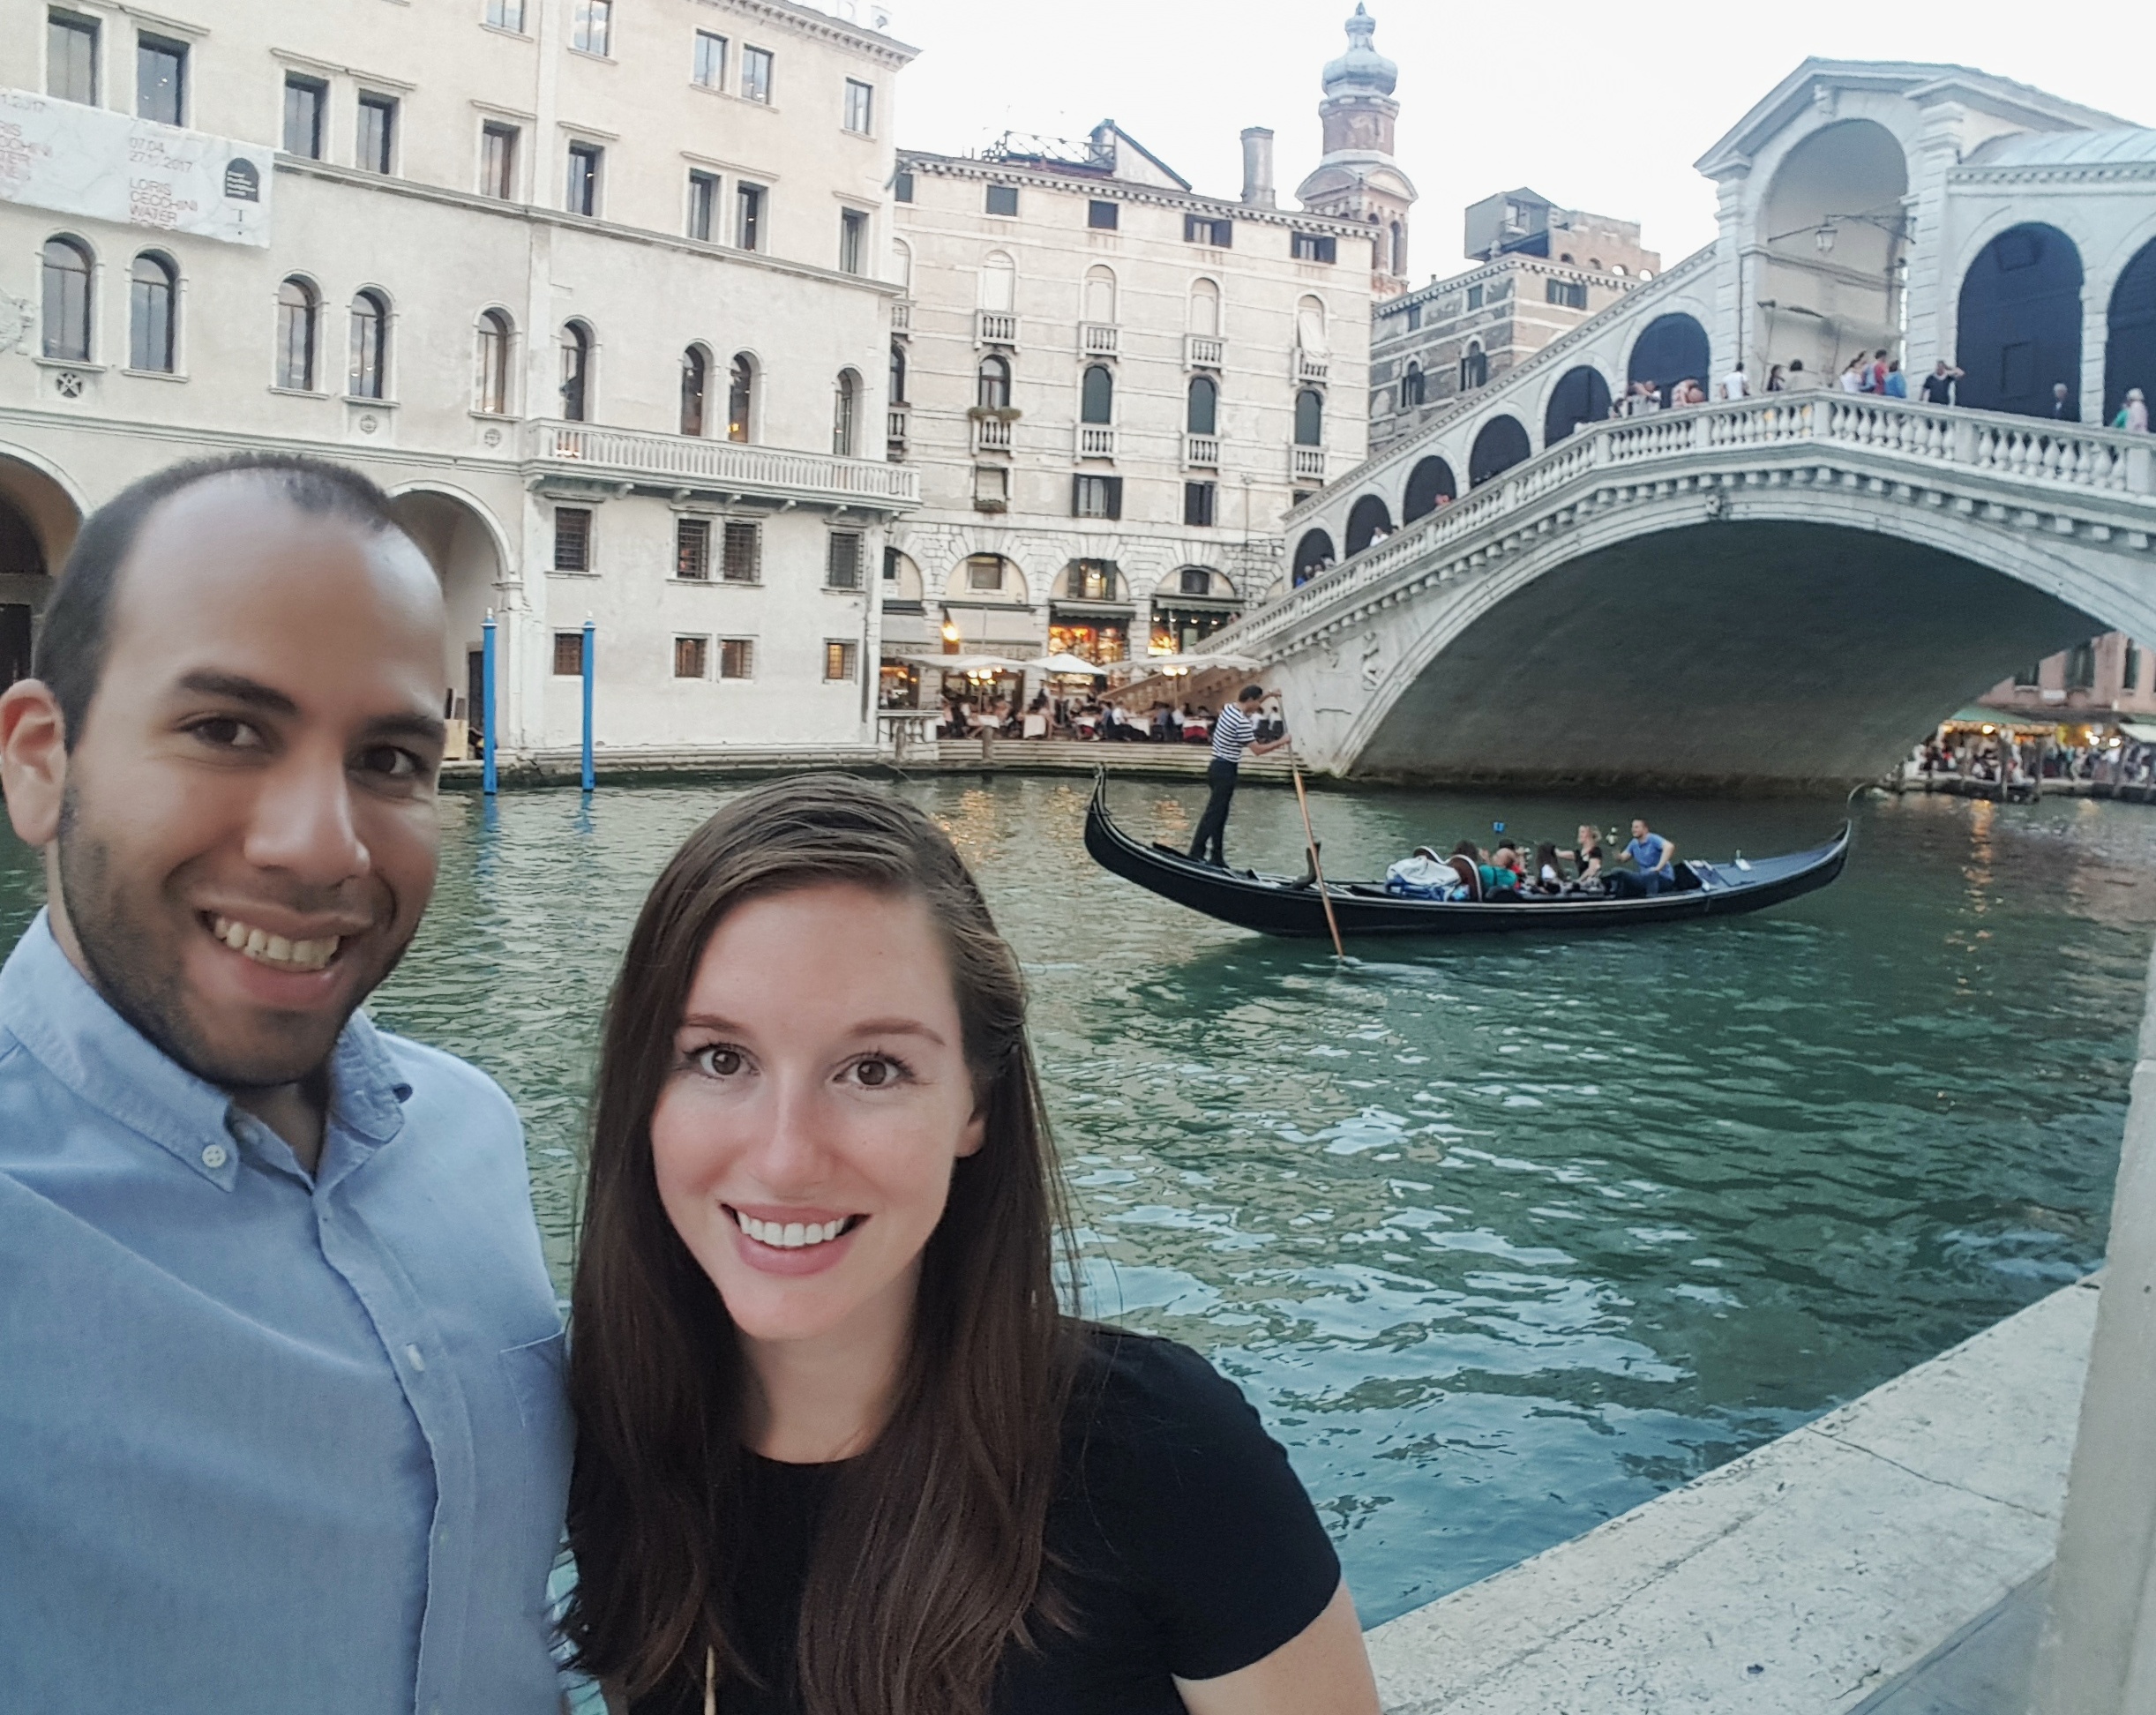 Alyssa and Michael in front of gondola in Venice, Italy